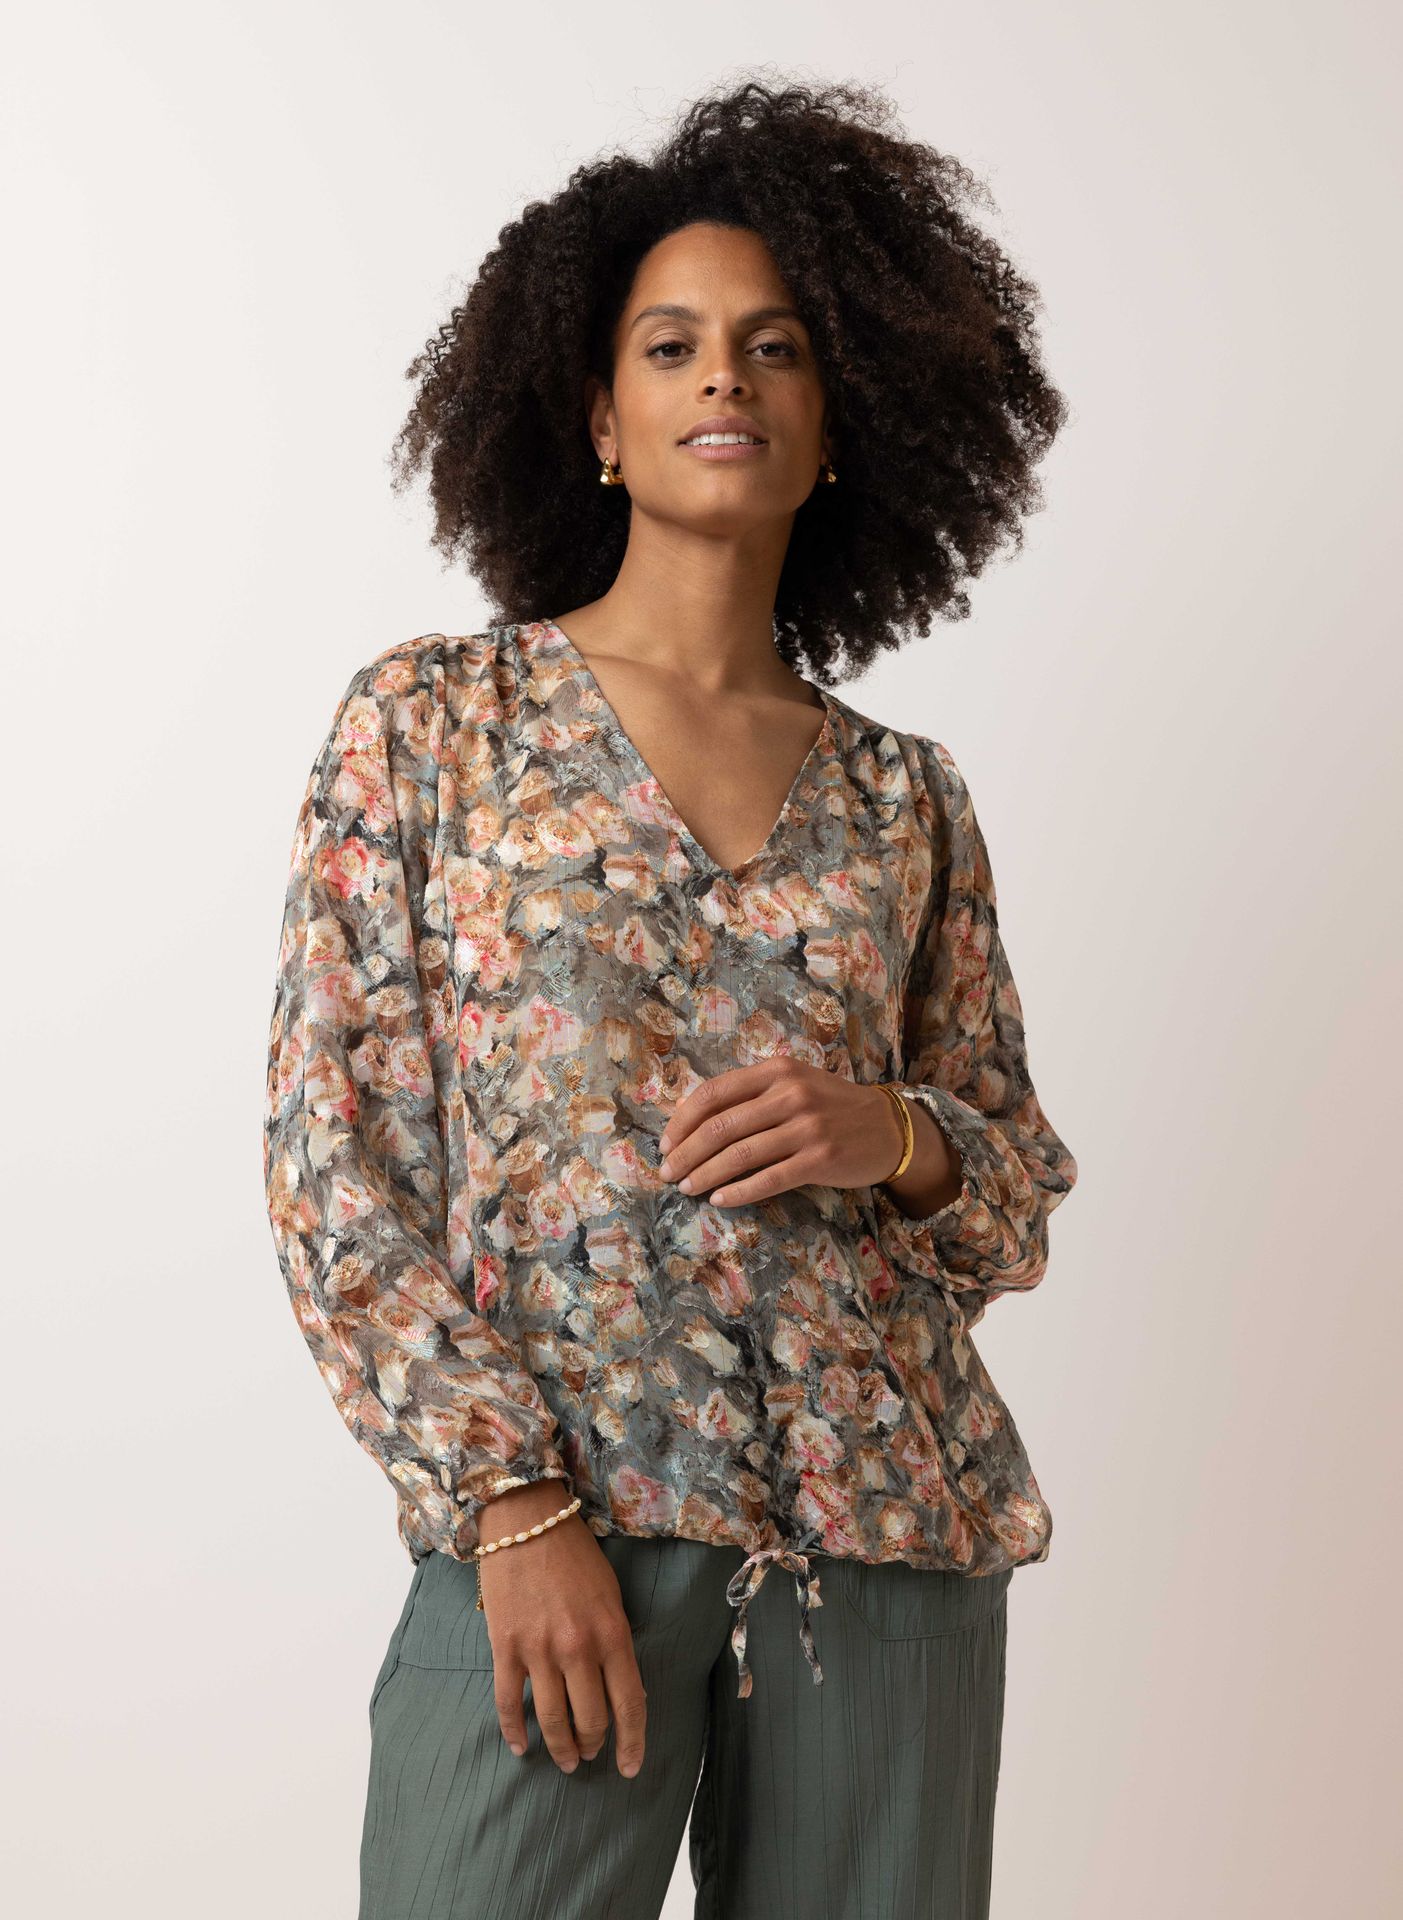 Norah Meerkleurige blouse multicolor 214477-002